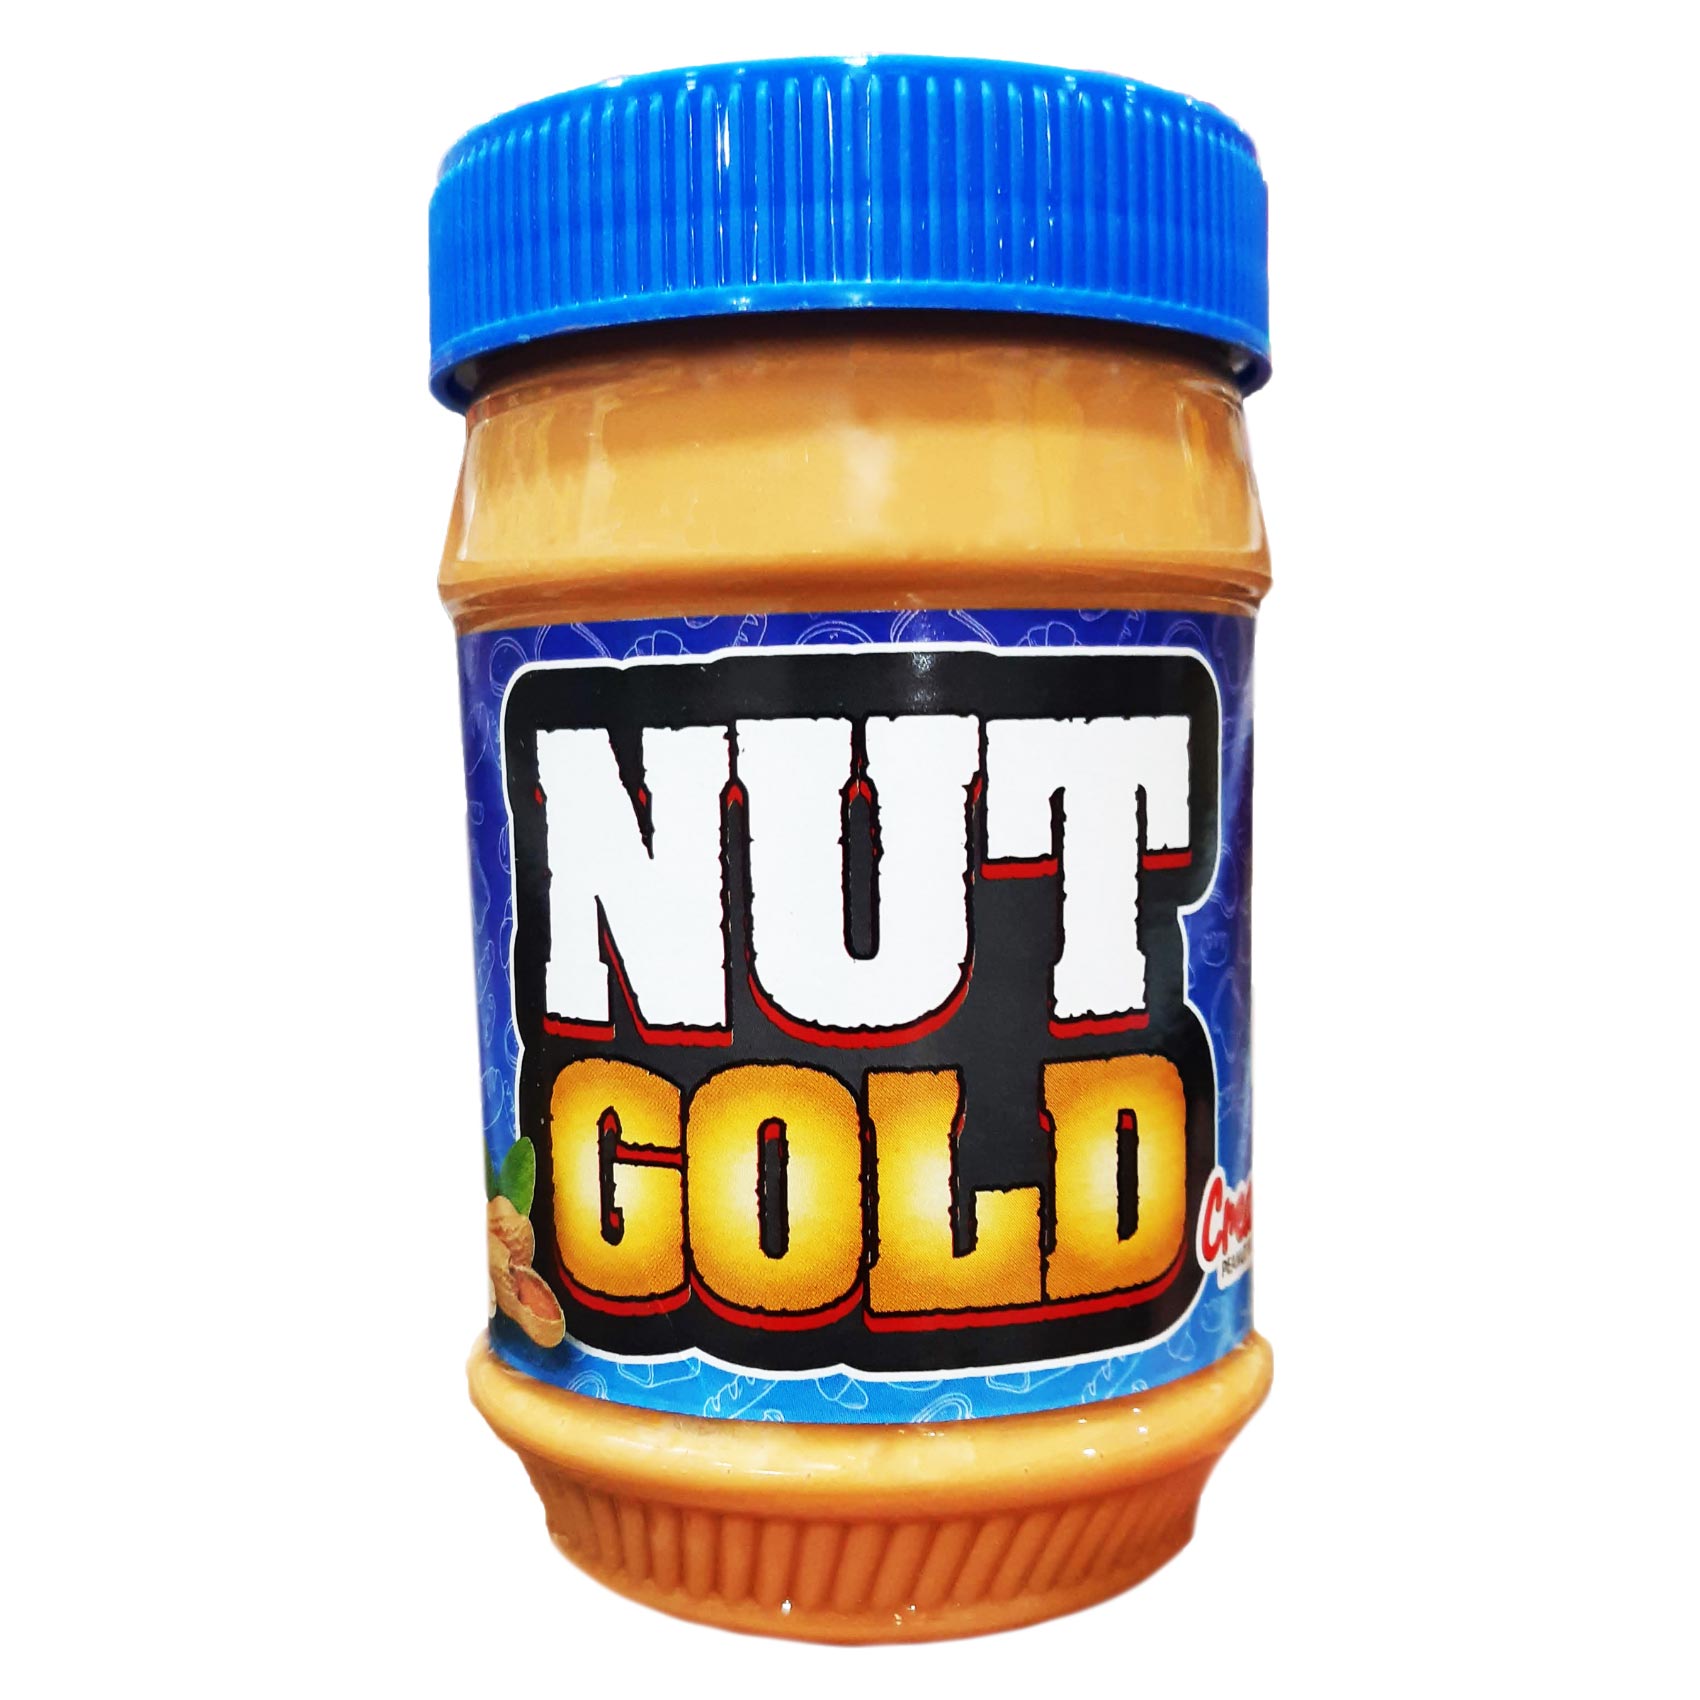 Nut Gold Creamy Peanut Butter 250g